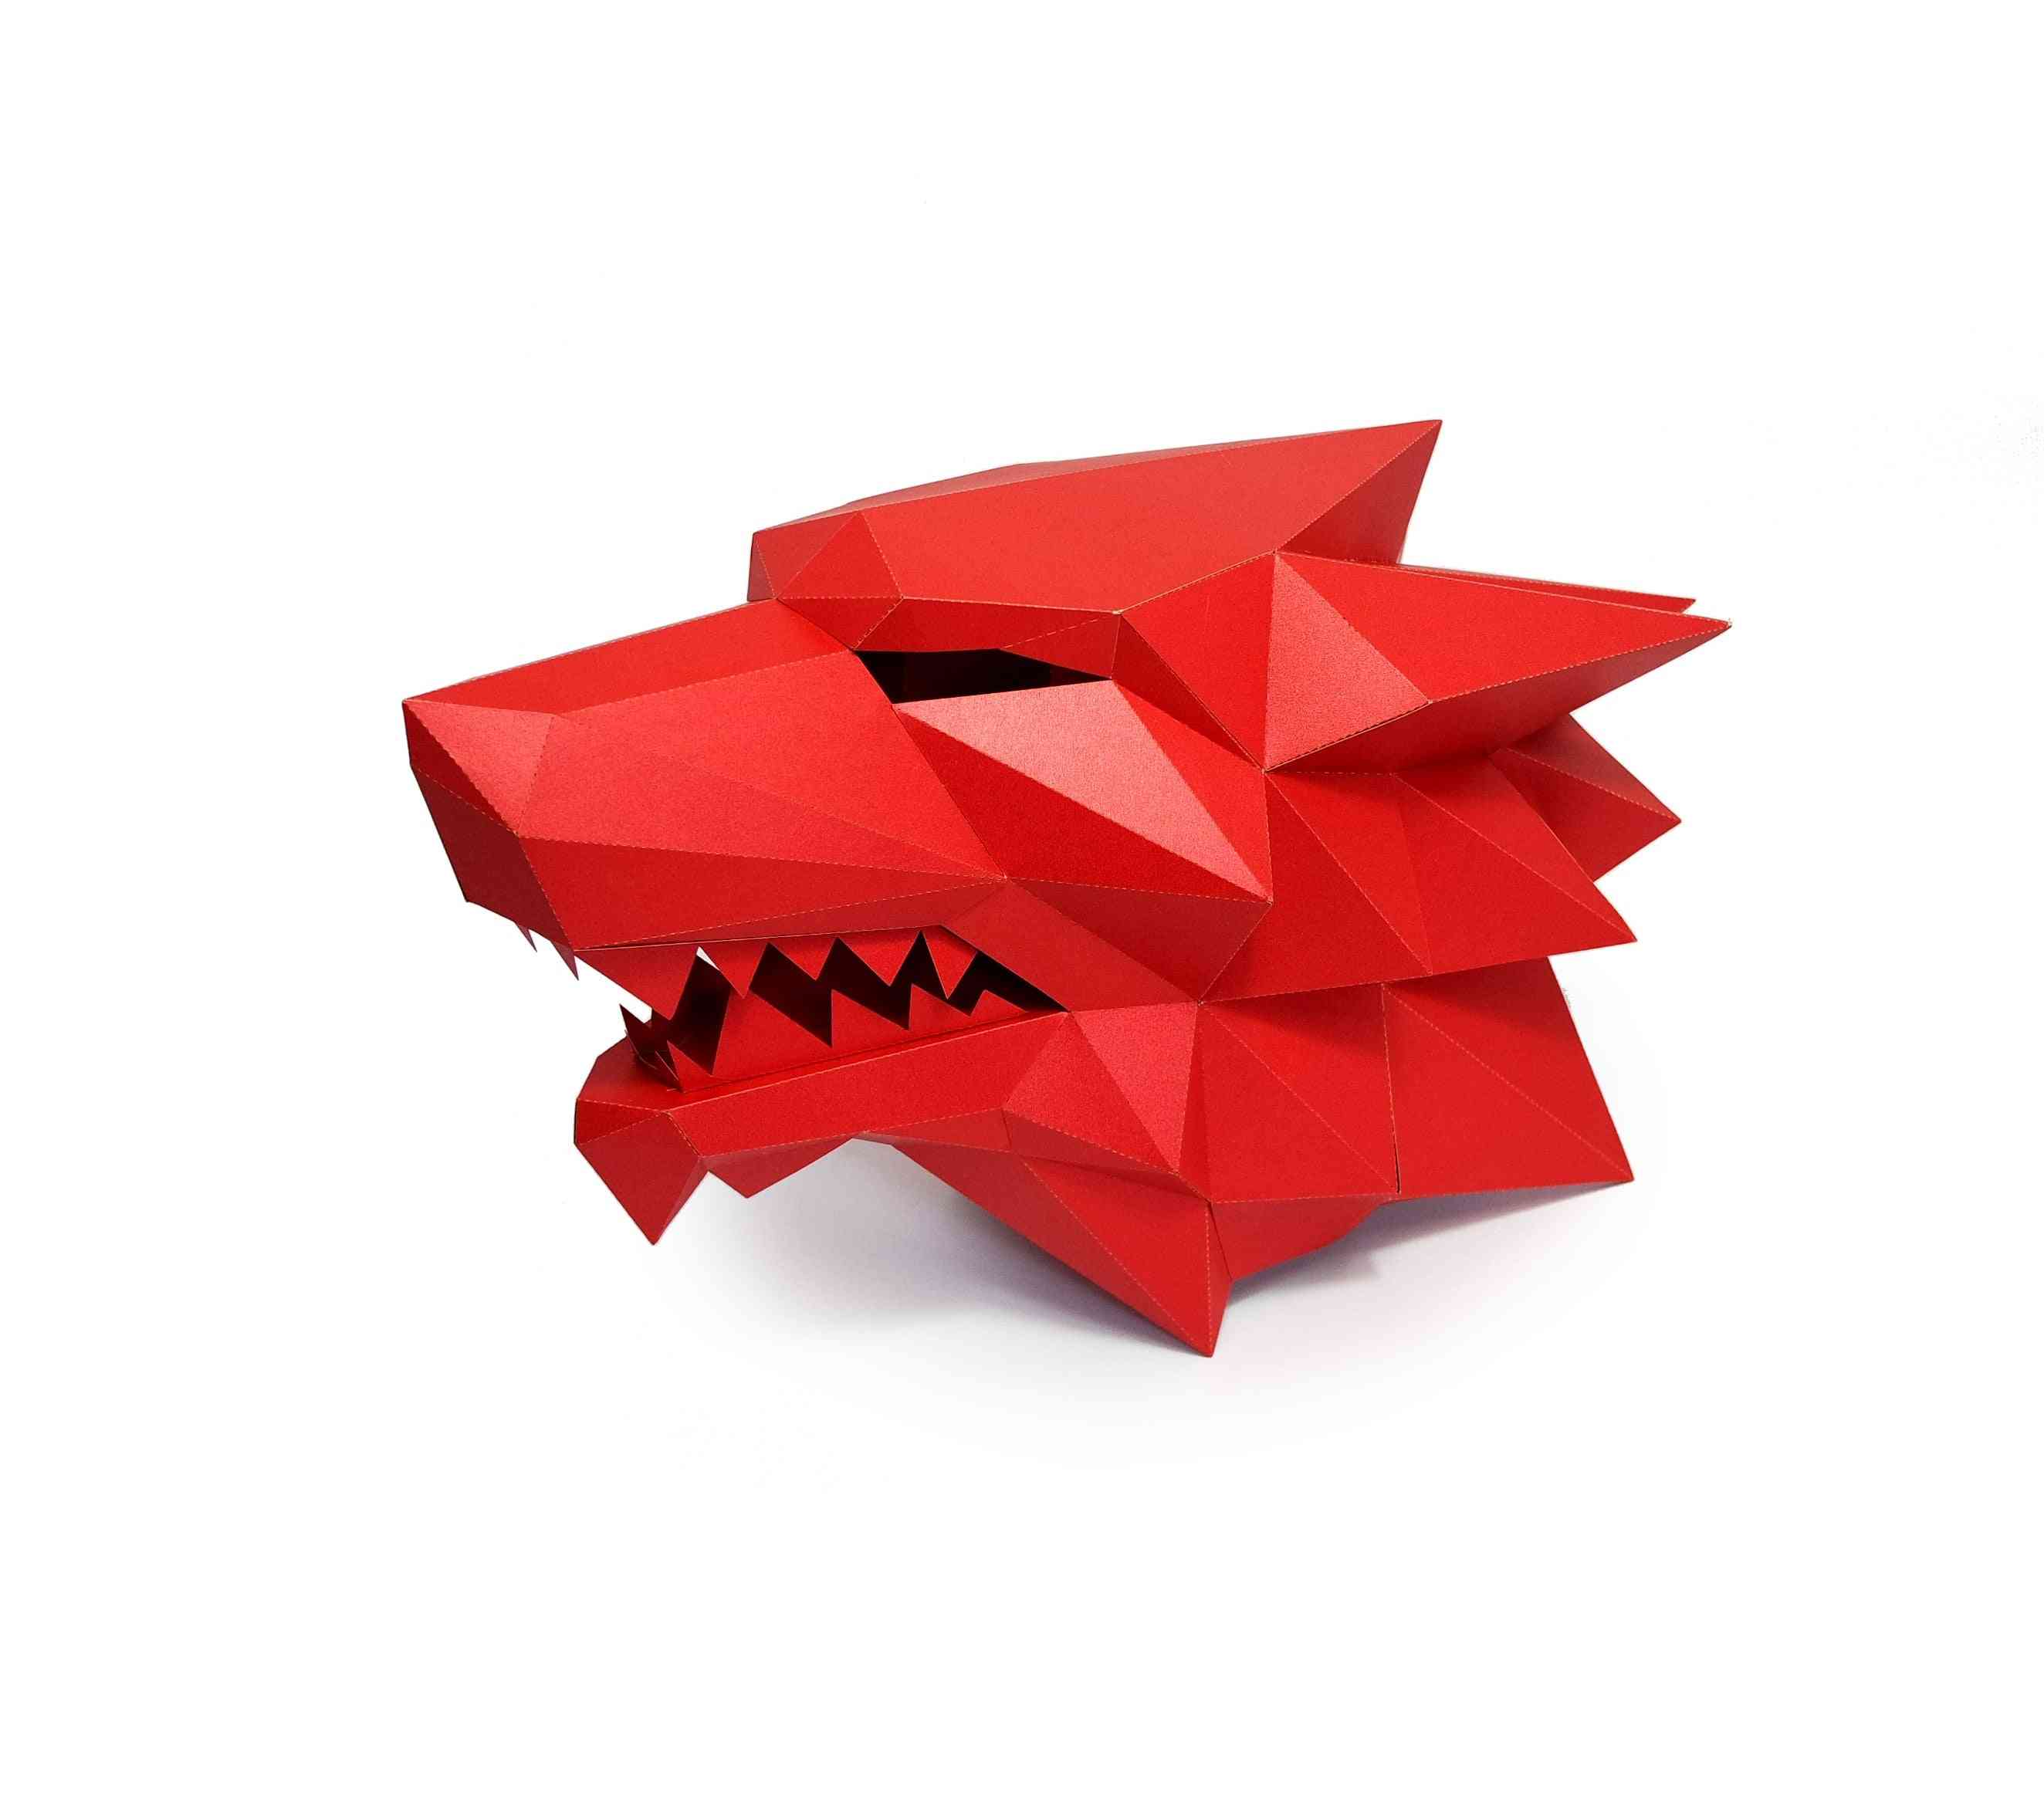 3d Werewolf Costume Cosplay Diy Paper Craft Mask